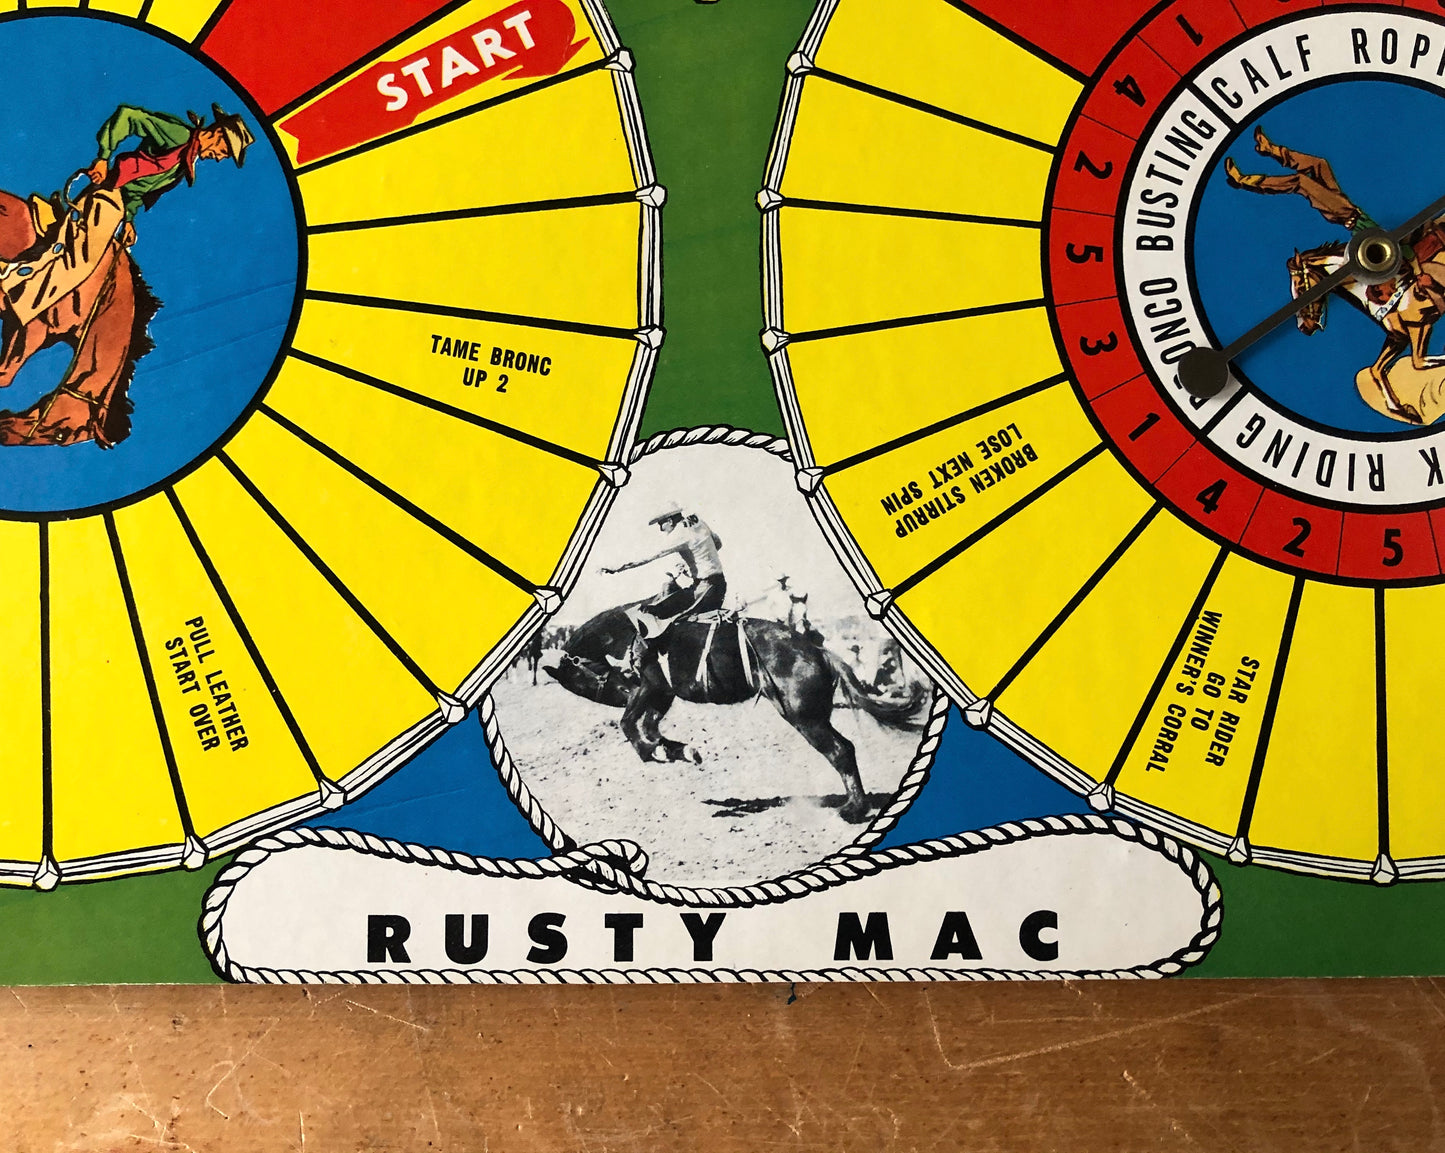 Vintage Roy Rogers Rodeo Game in Original Box (c.1949)